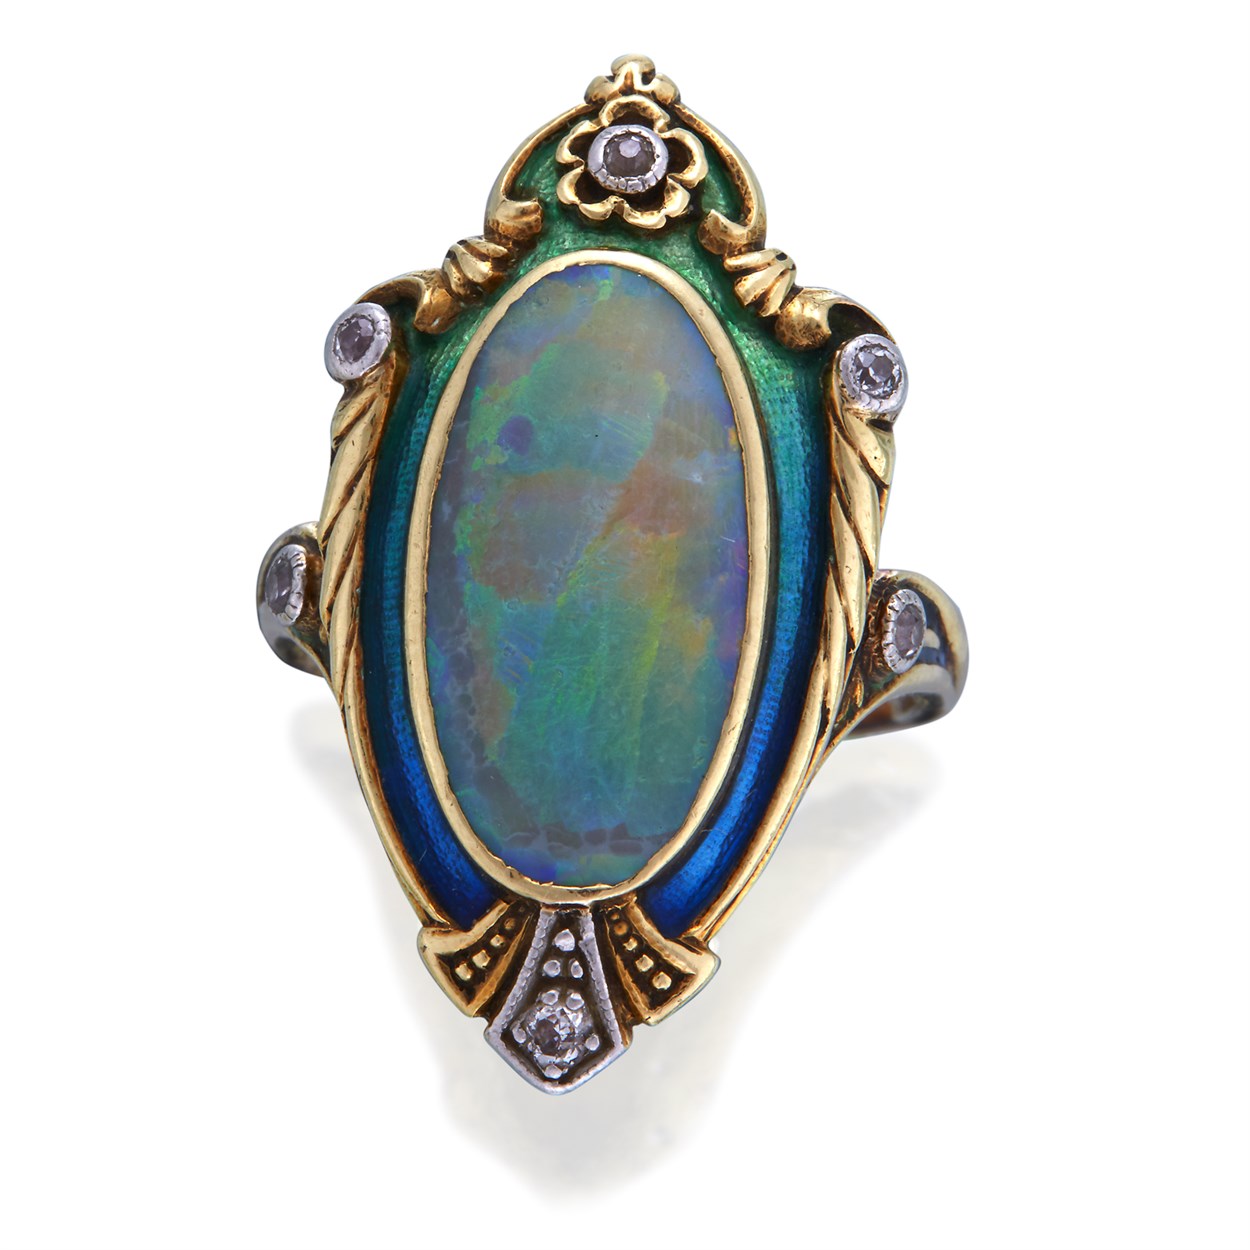 Lot 1 - An Art Nouveau opal and enamel ring, Marcus & Co.